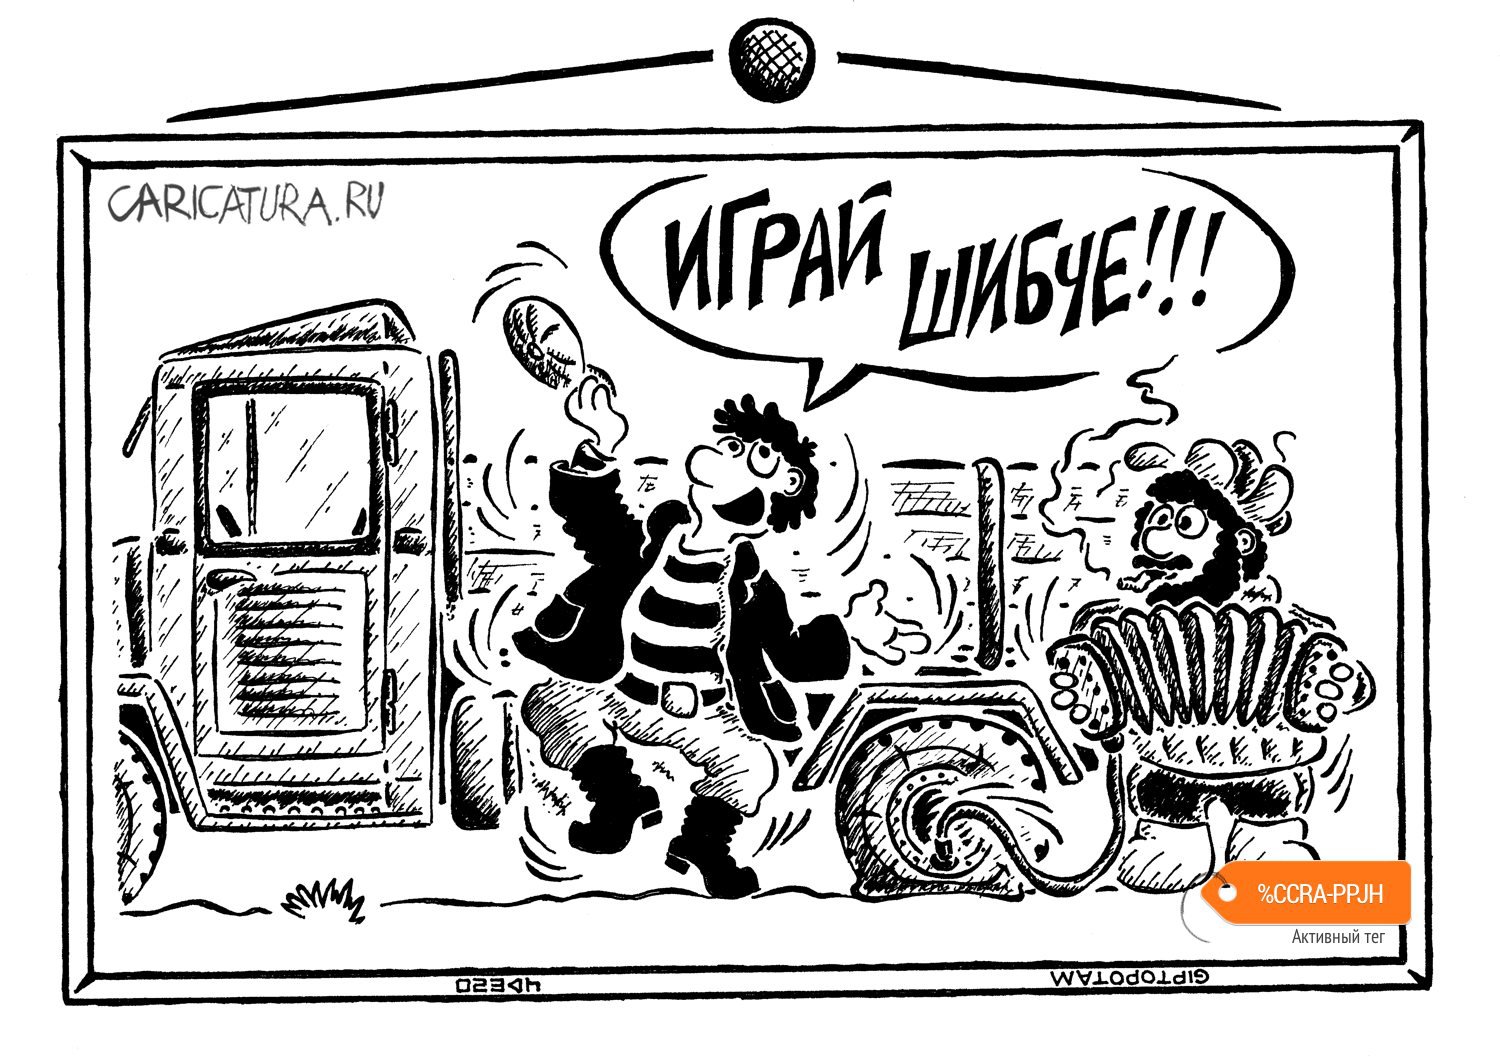 Карикатура "Дело было не в бо...яне", Александр Евангелистов